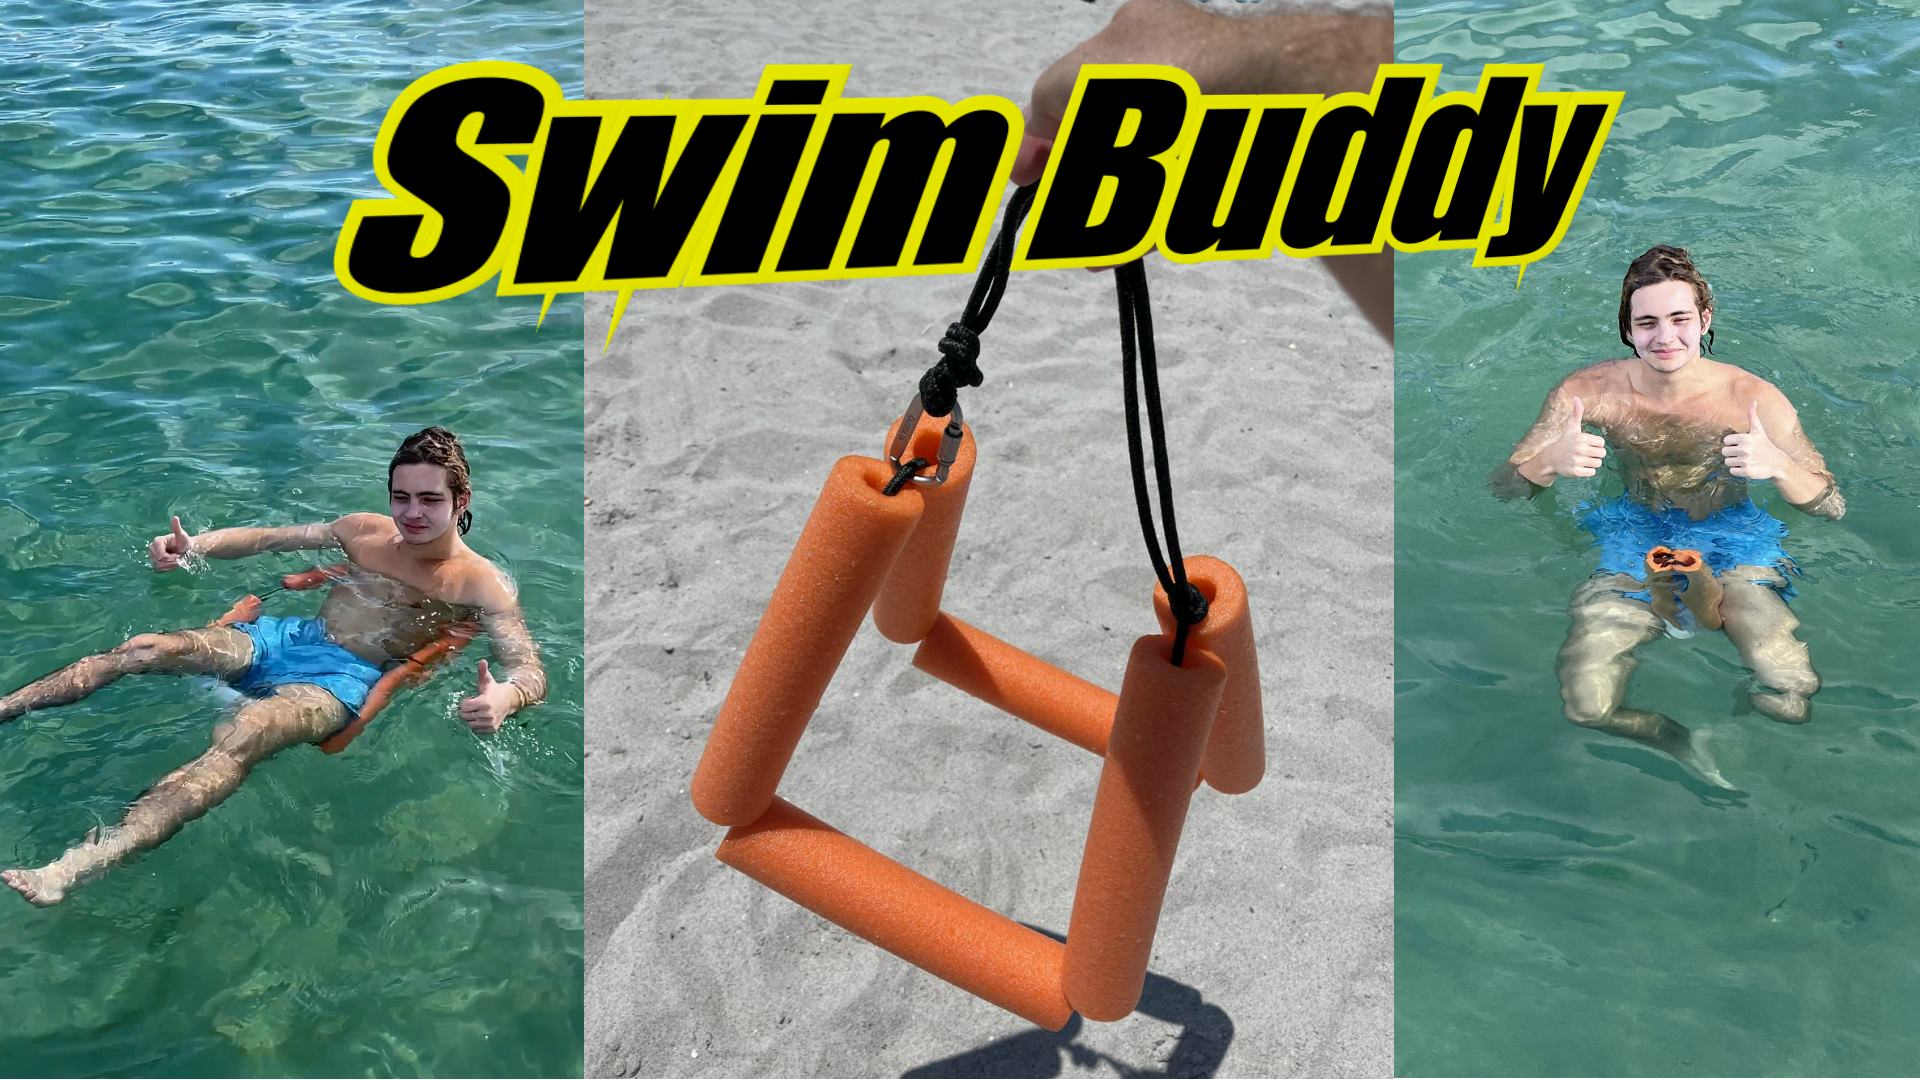 buddy system swimming